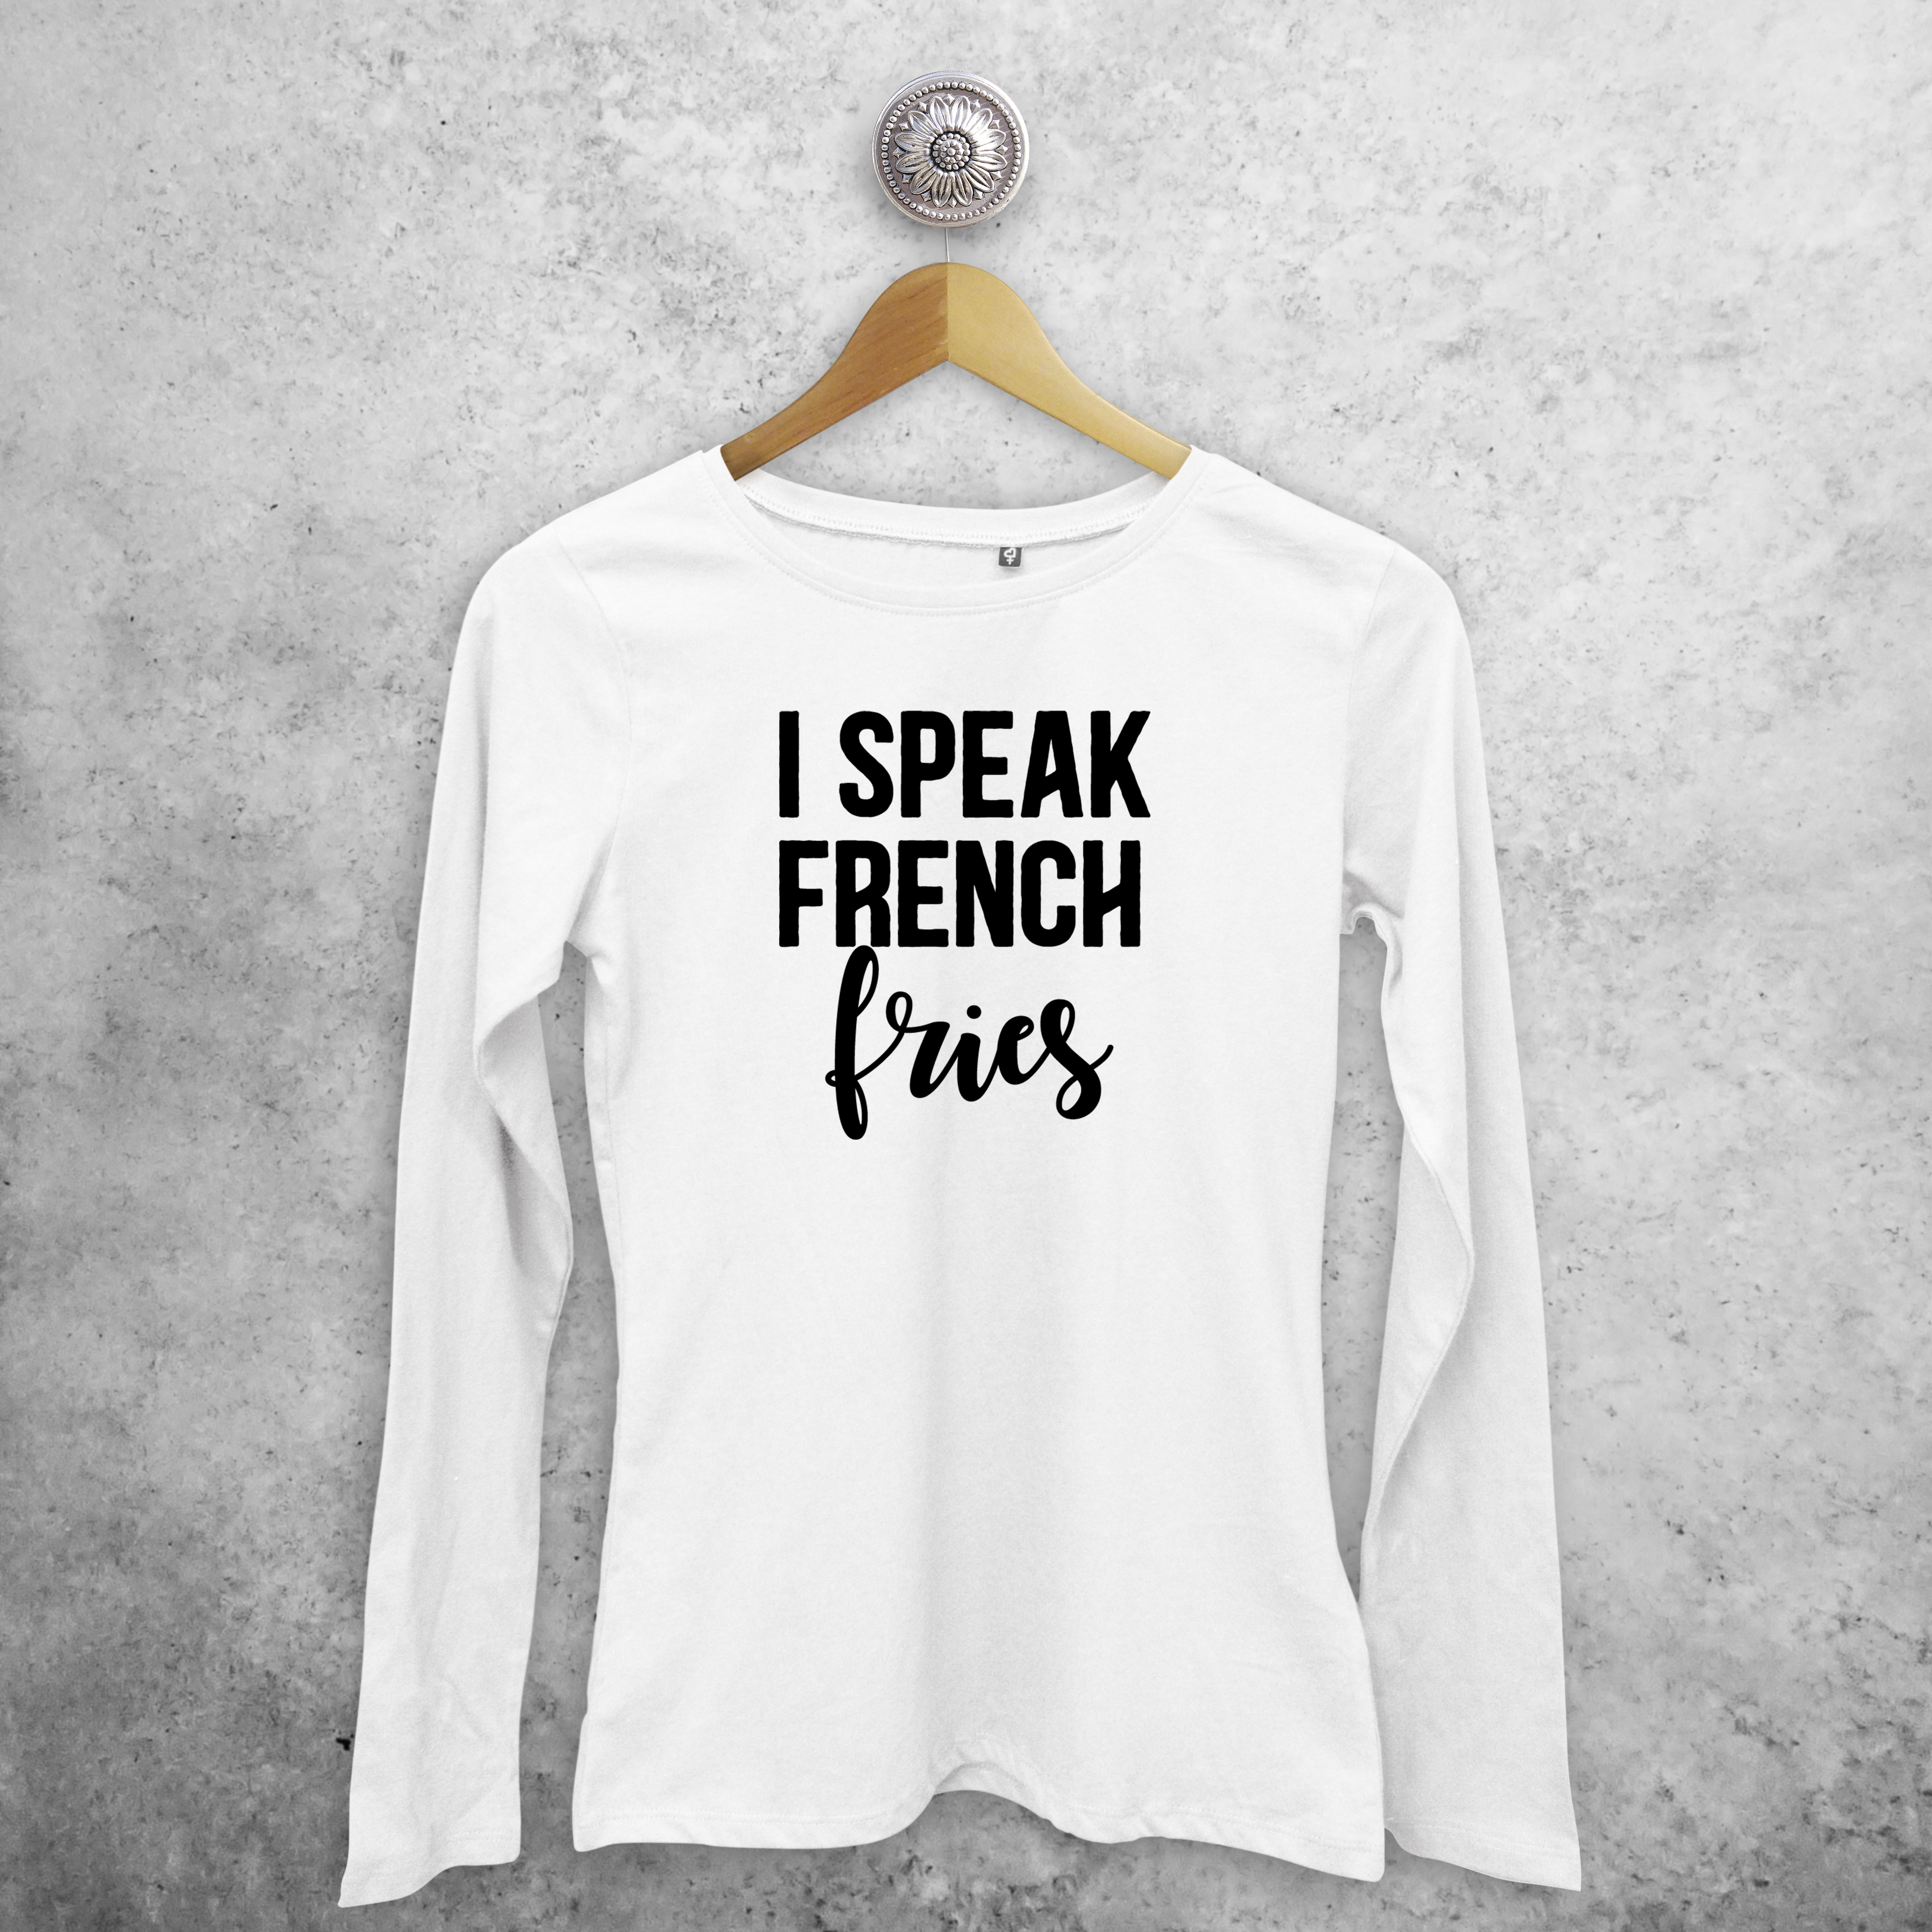 'I speak French fries' adult longsleeve shirt